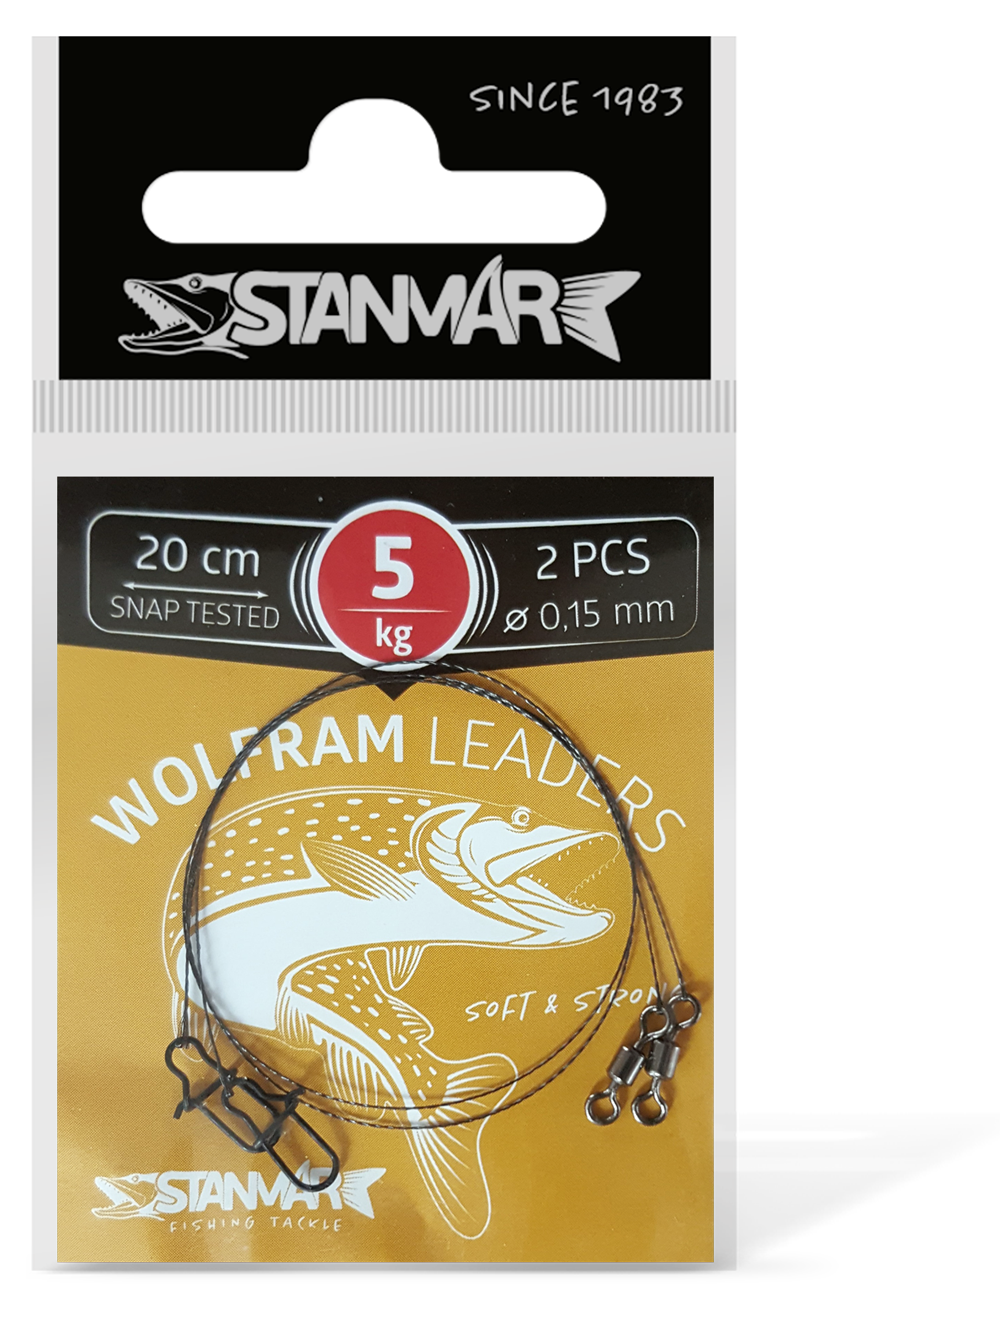 STAN-MAR Lanko wolframové 20cm 5kg(50 ks, 25x2)